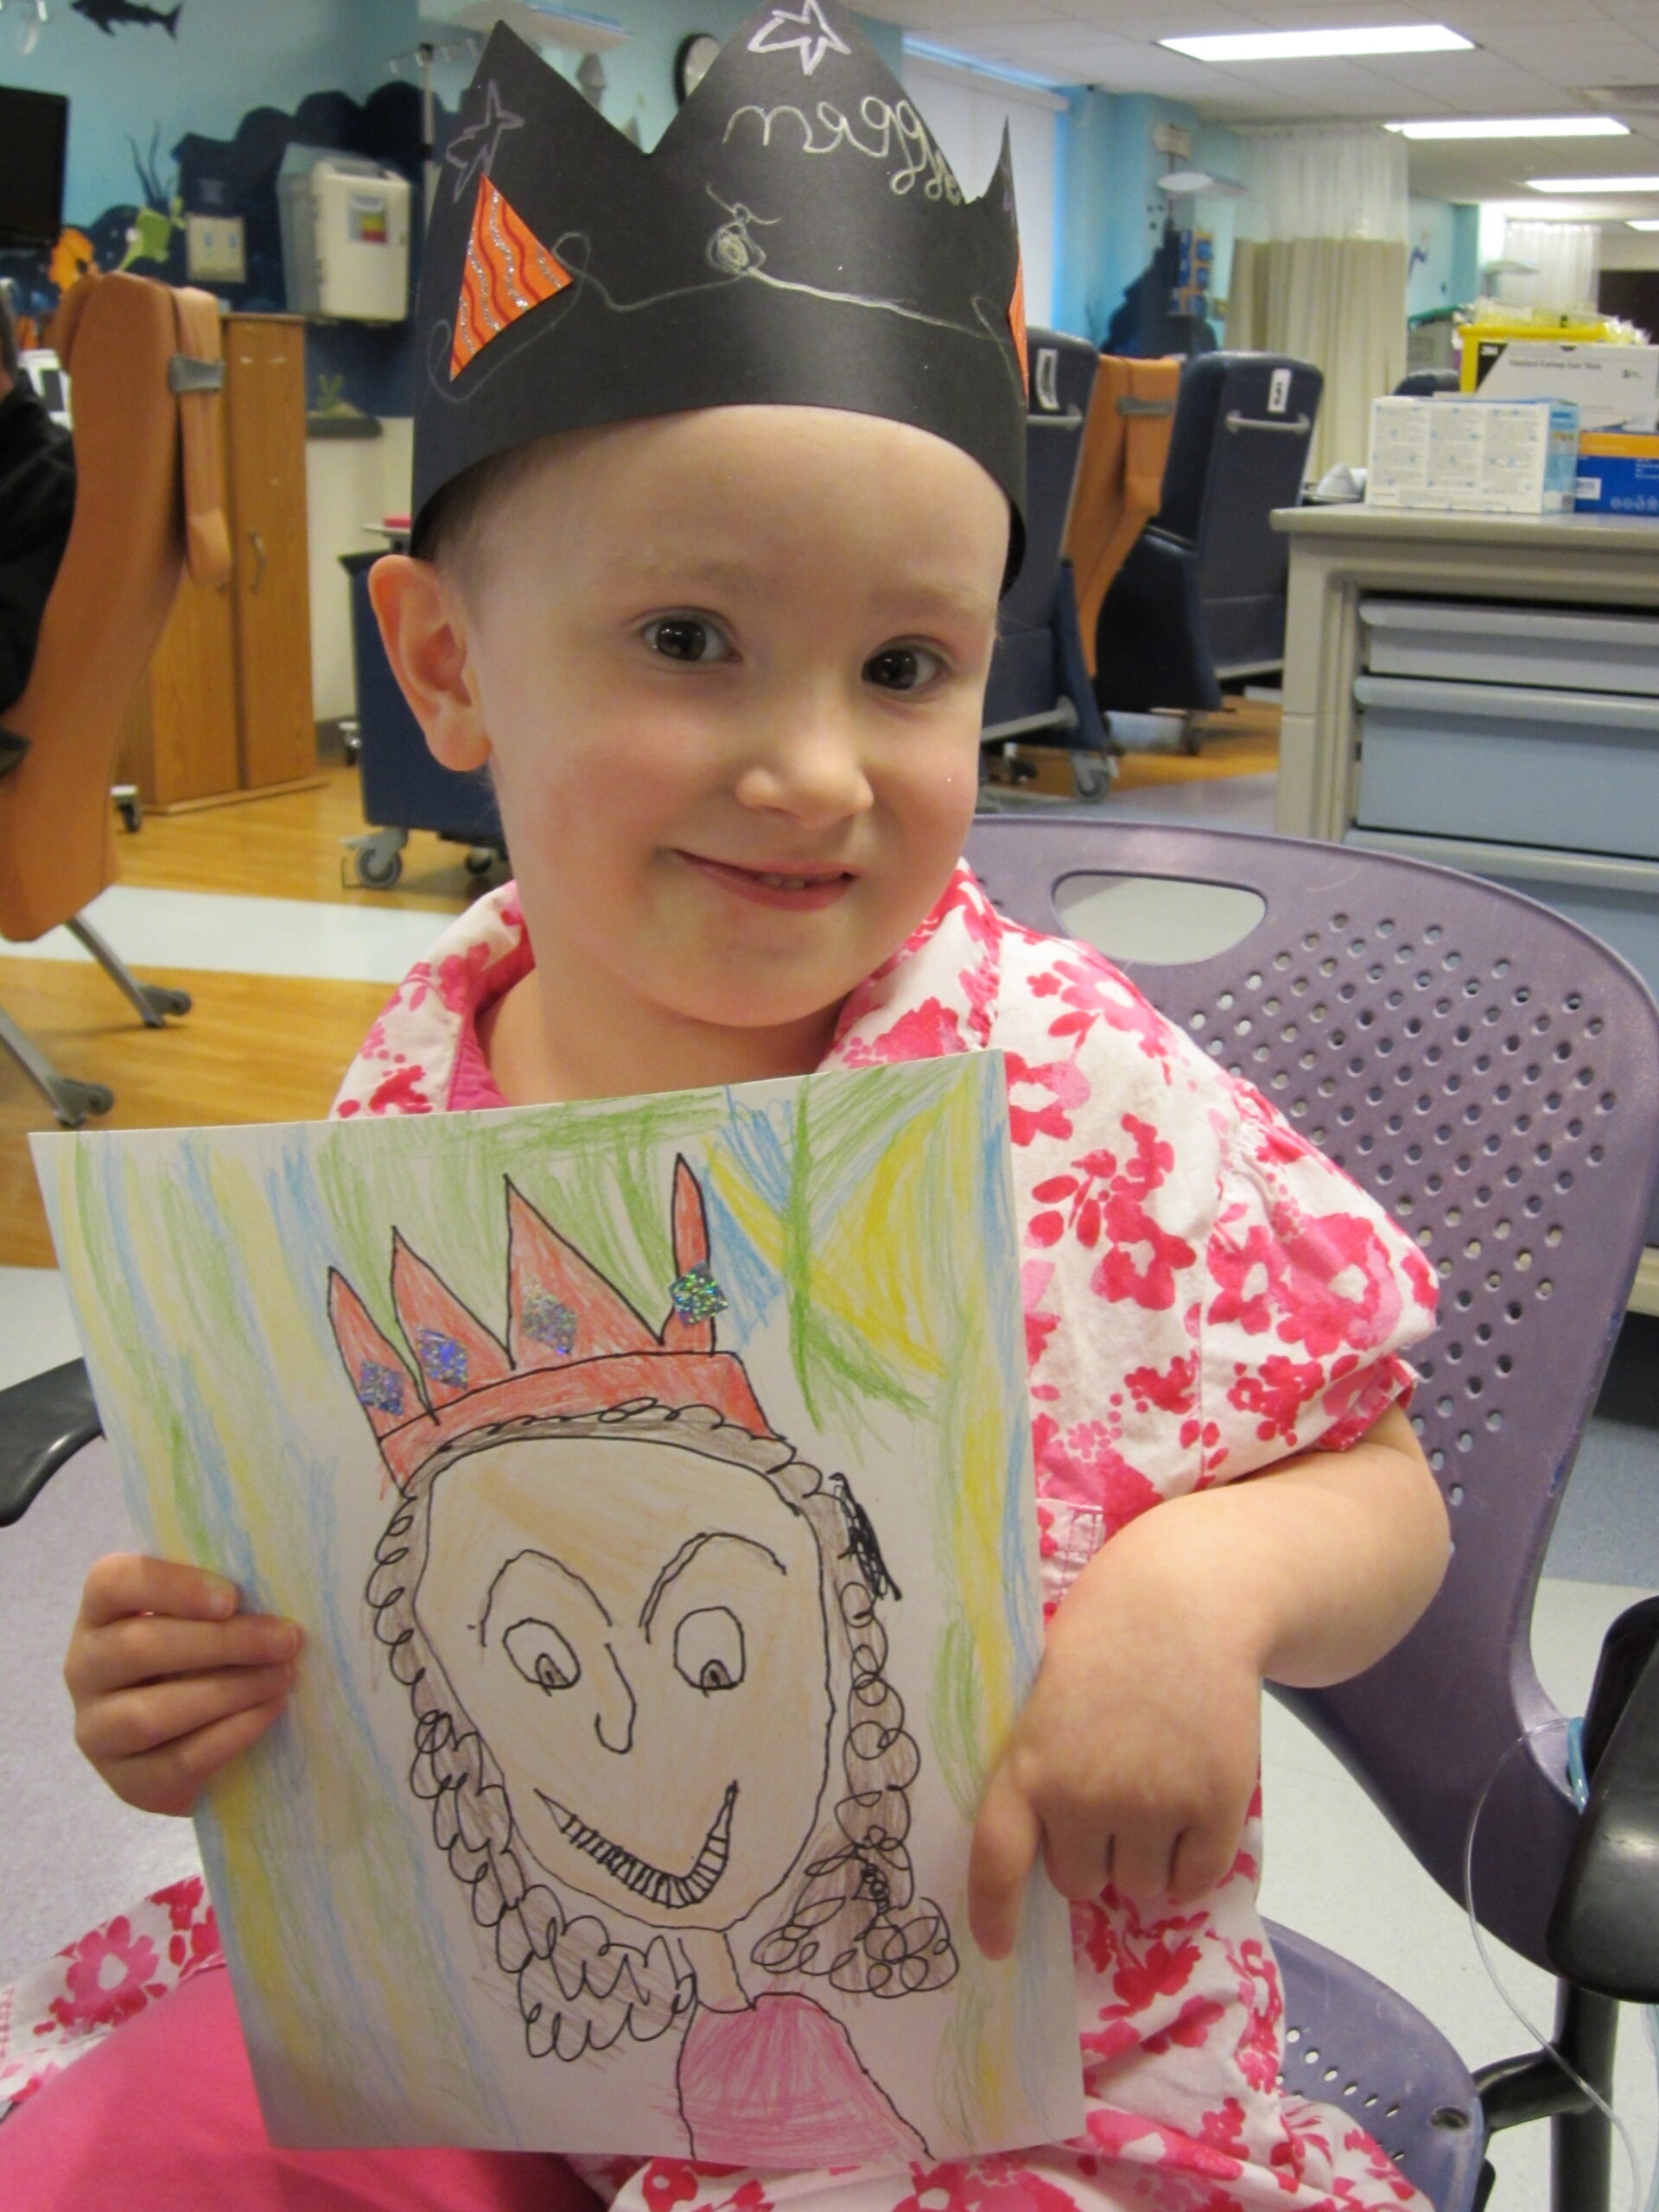 Small girl in homemade crown holding artwork